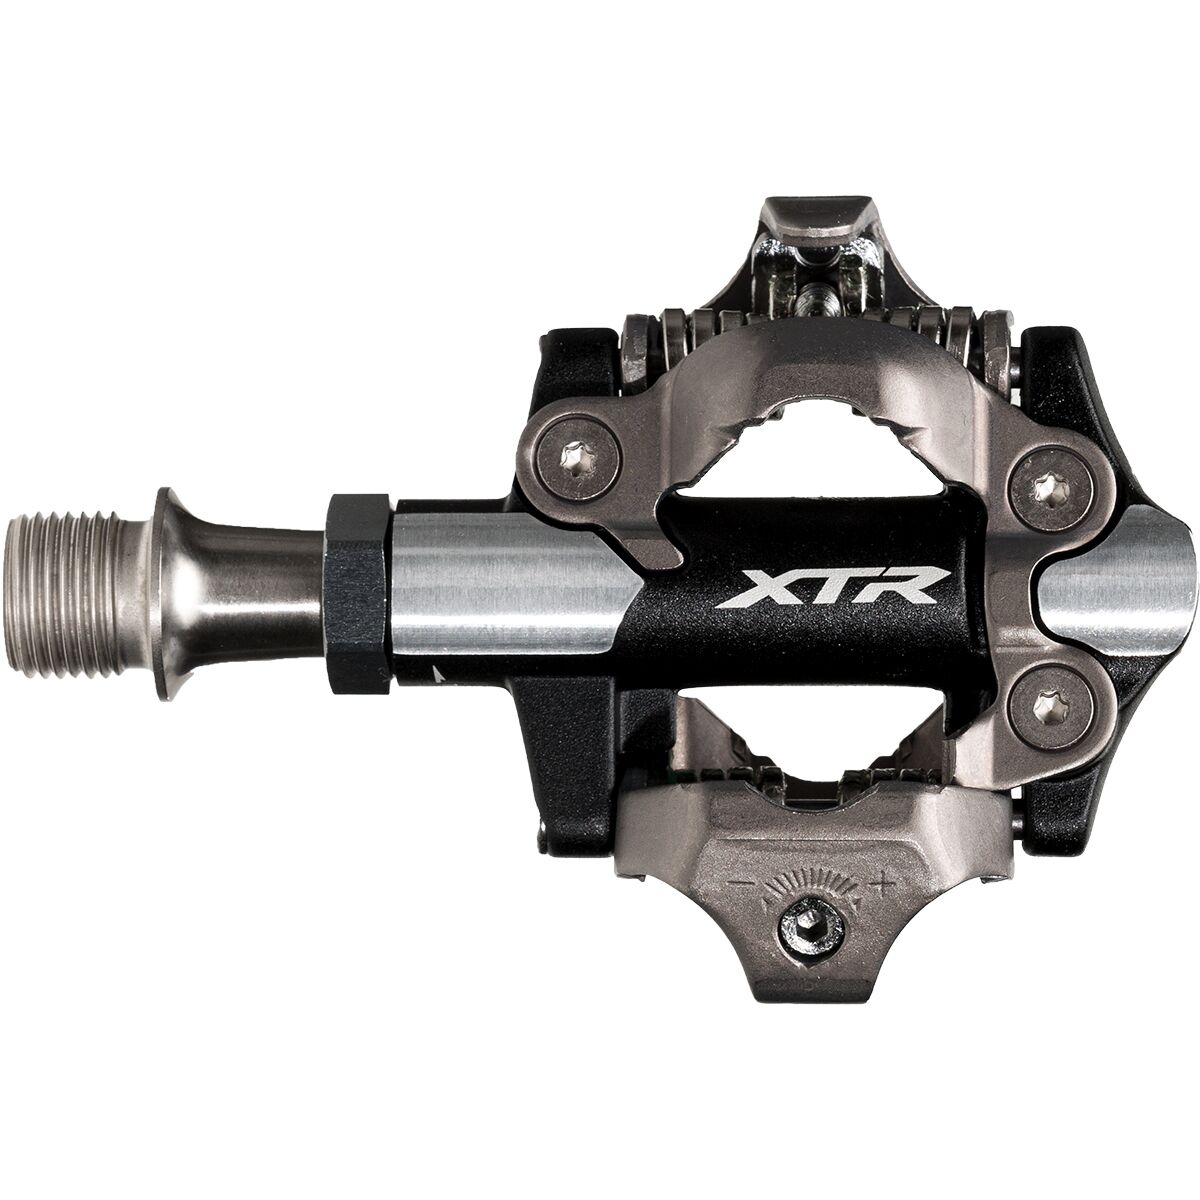 Shimano XTR PD-M9100 Pedals - Components